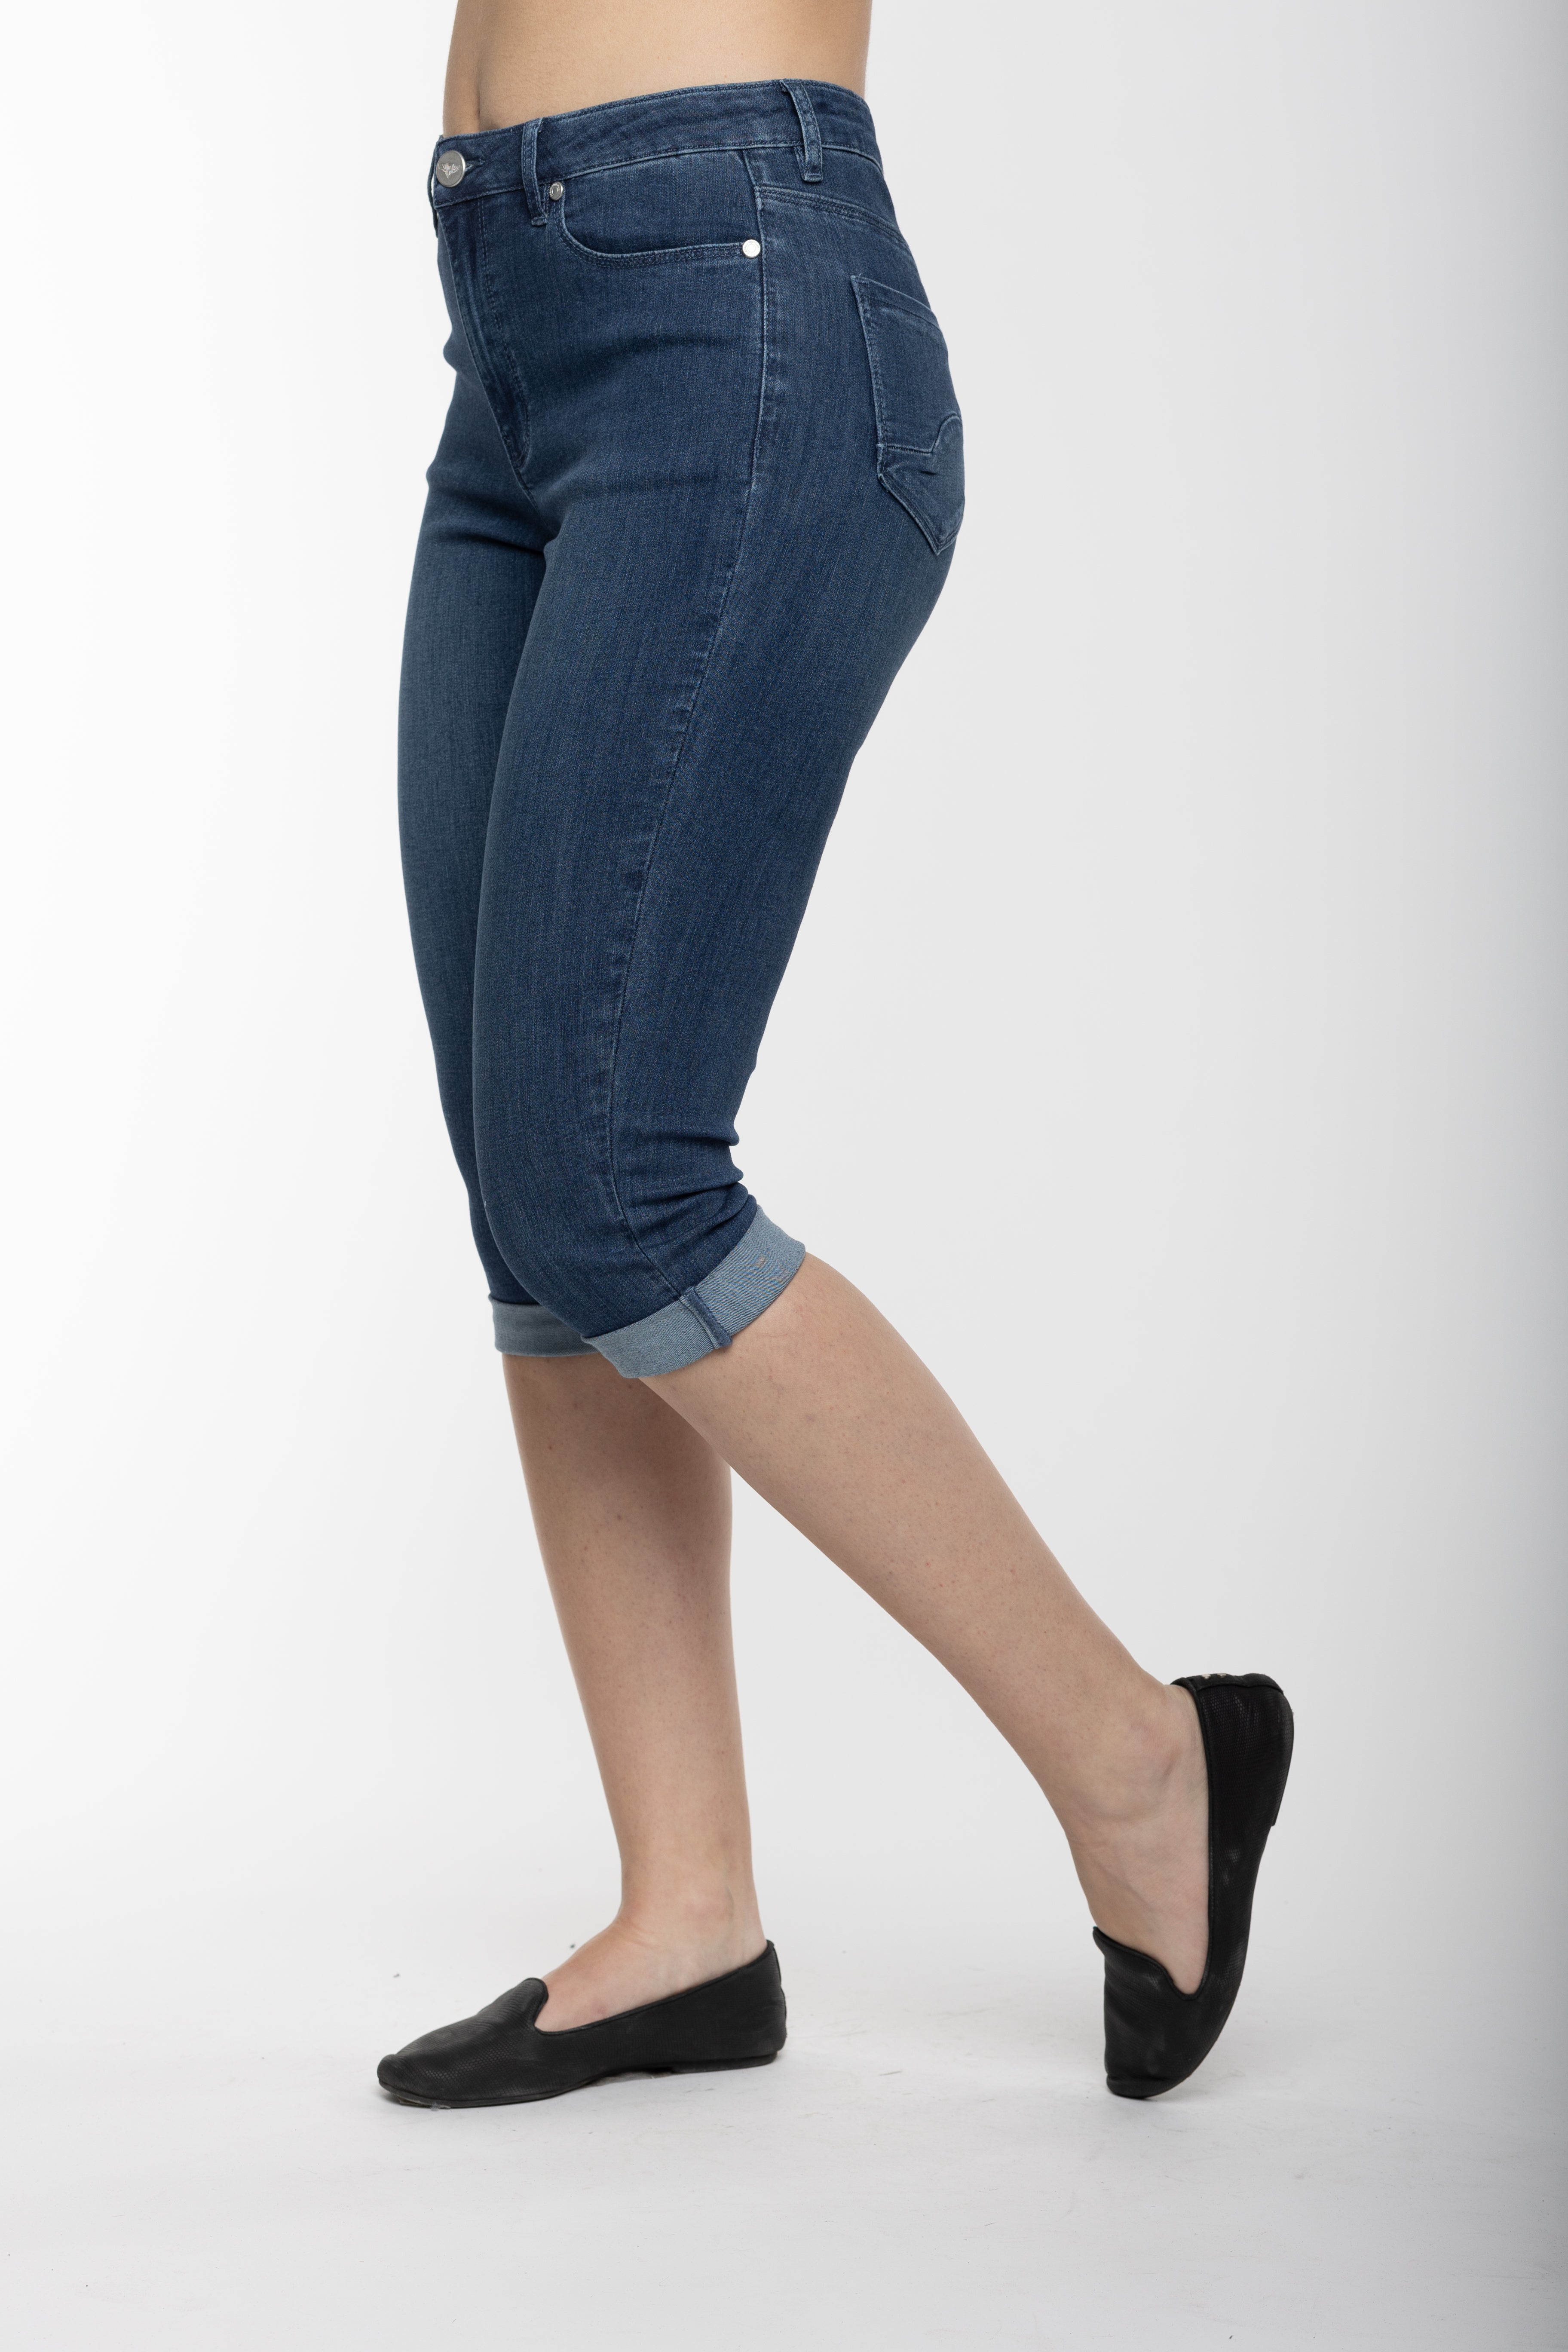 Carreli Jeans® | Premium Angela Fit 5 Pocket Capri in Stone Wash